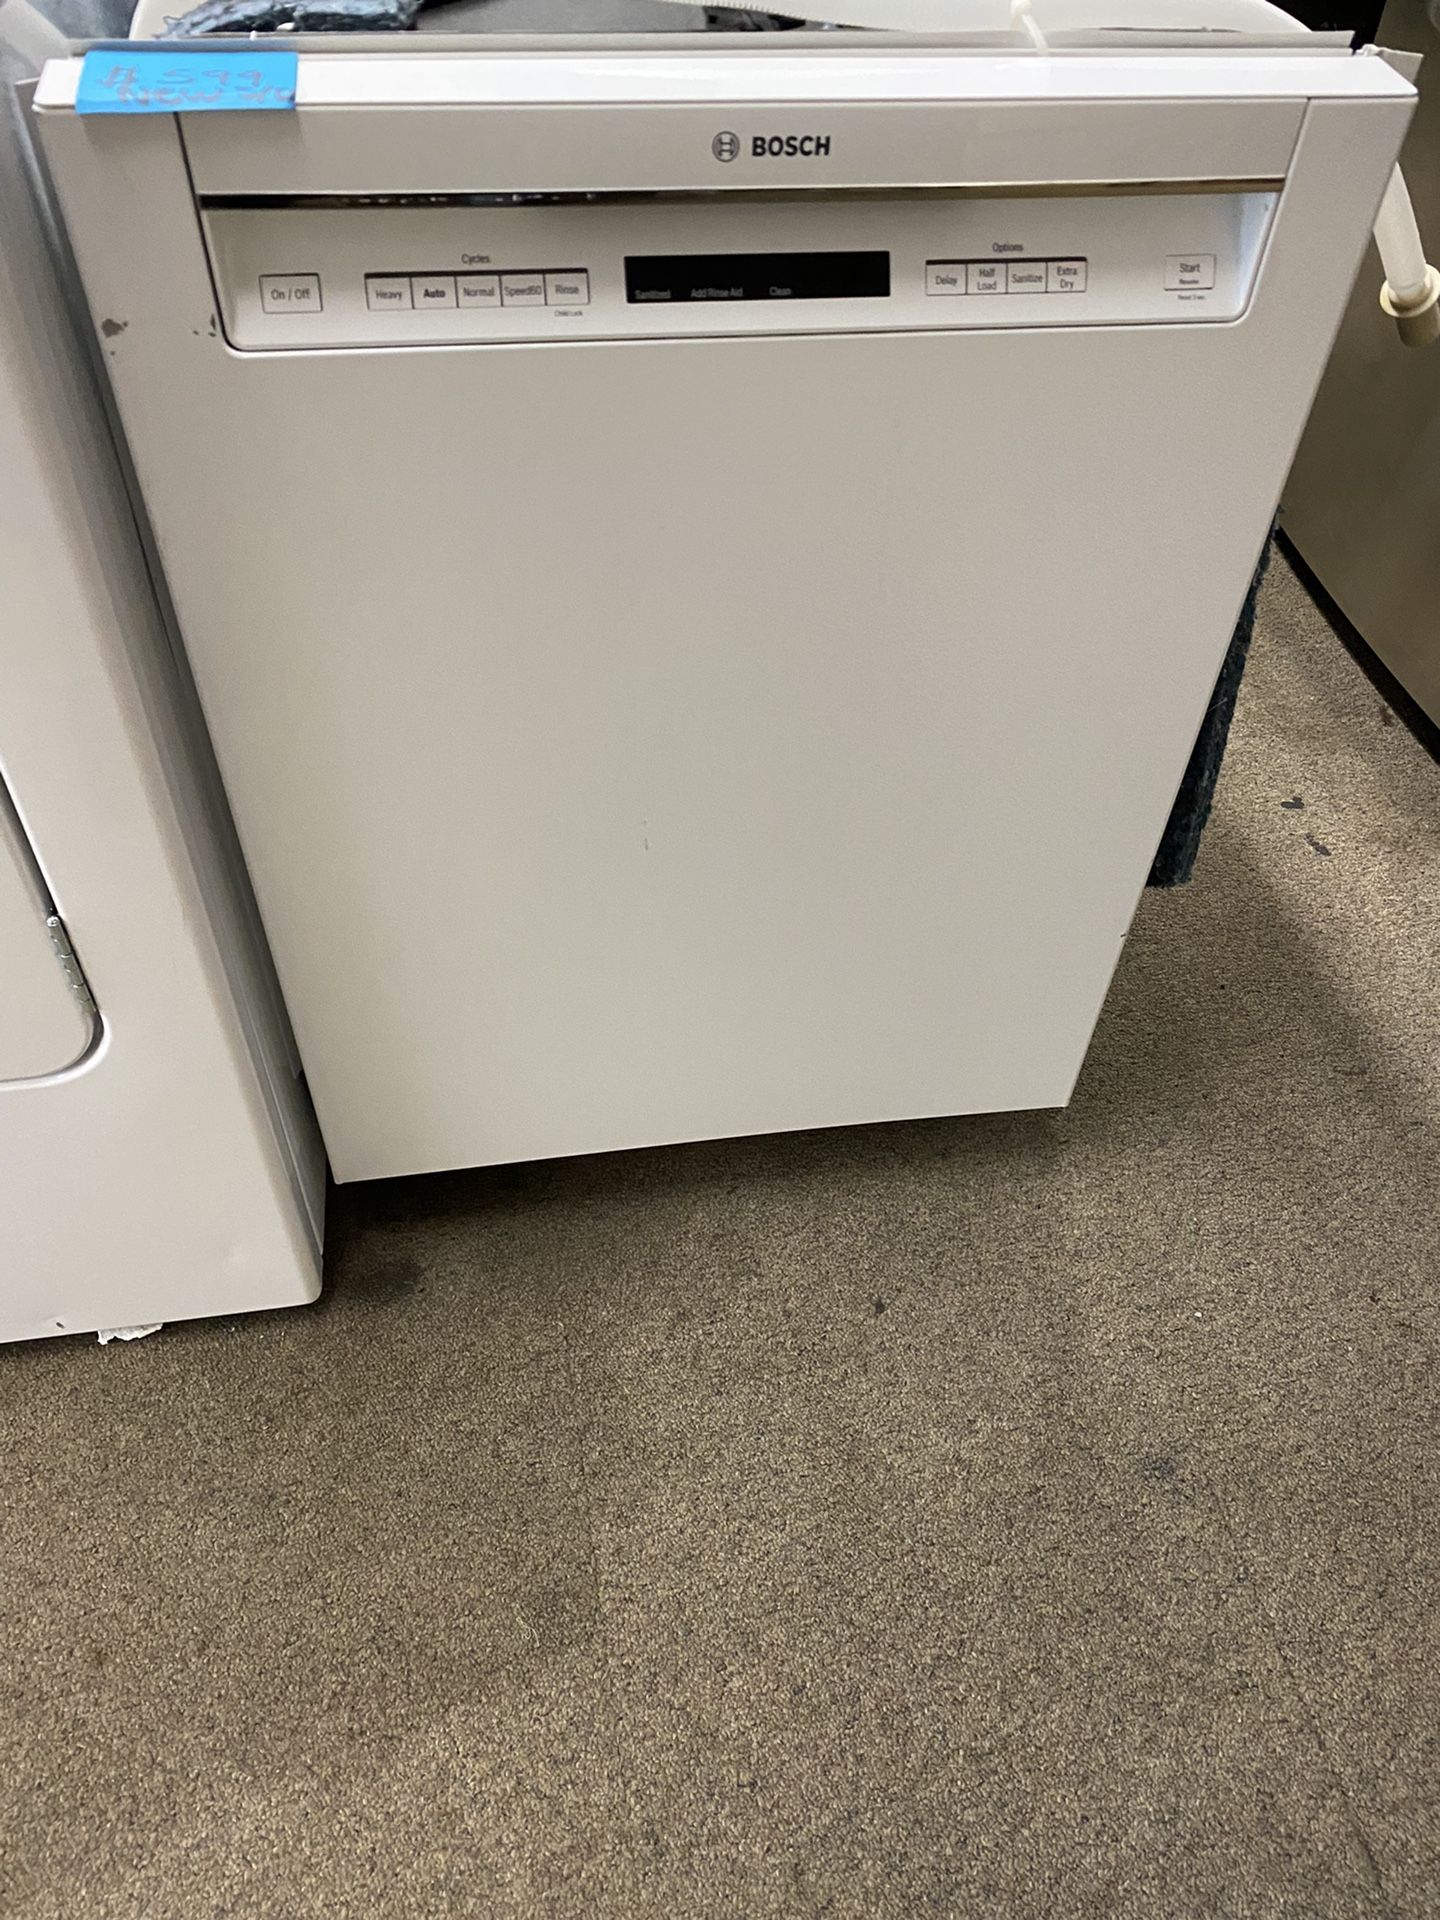 New  Bosch  Dishwasher  Excellent Conditions  6 Months Warranty 